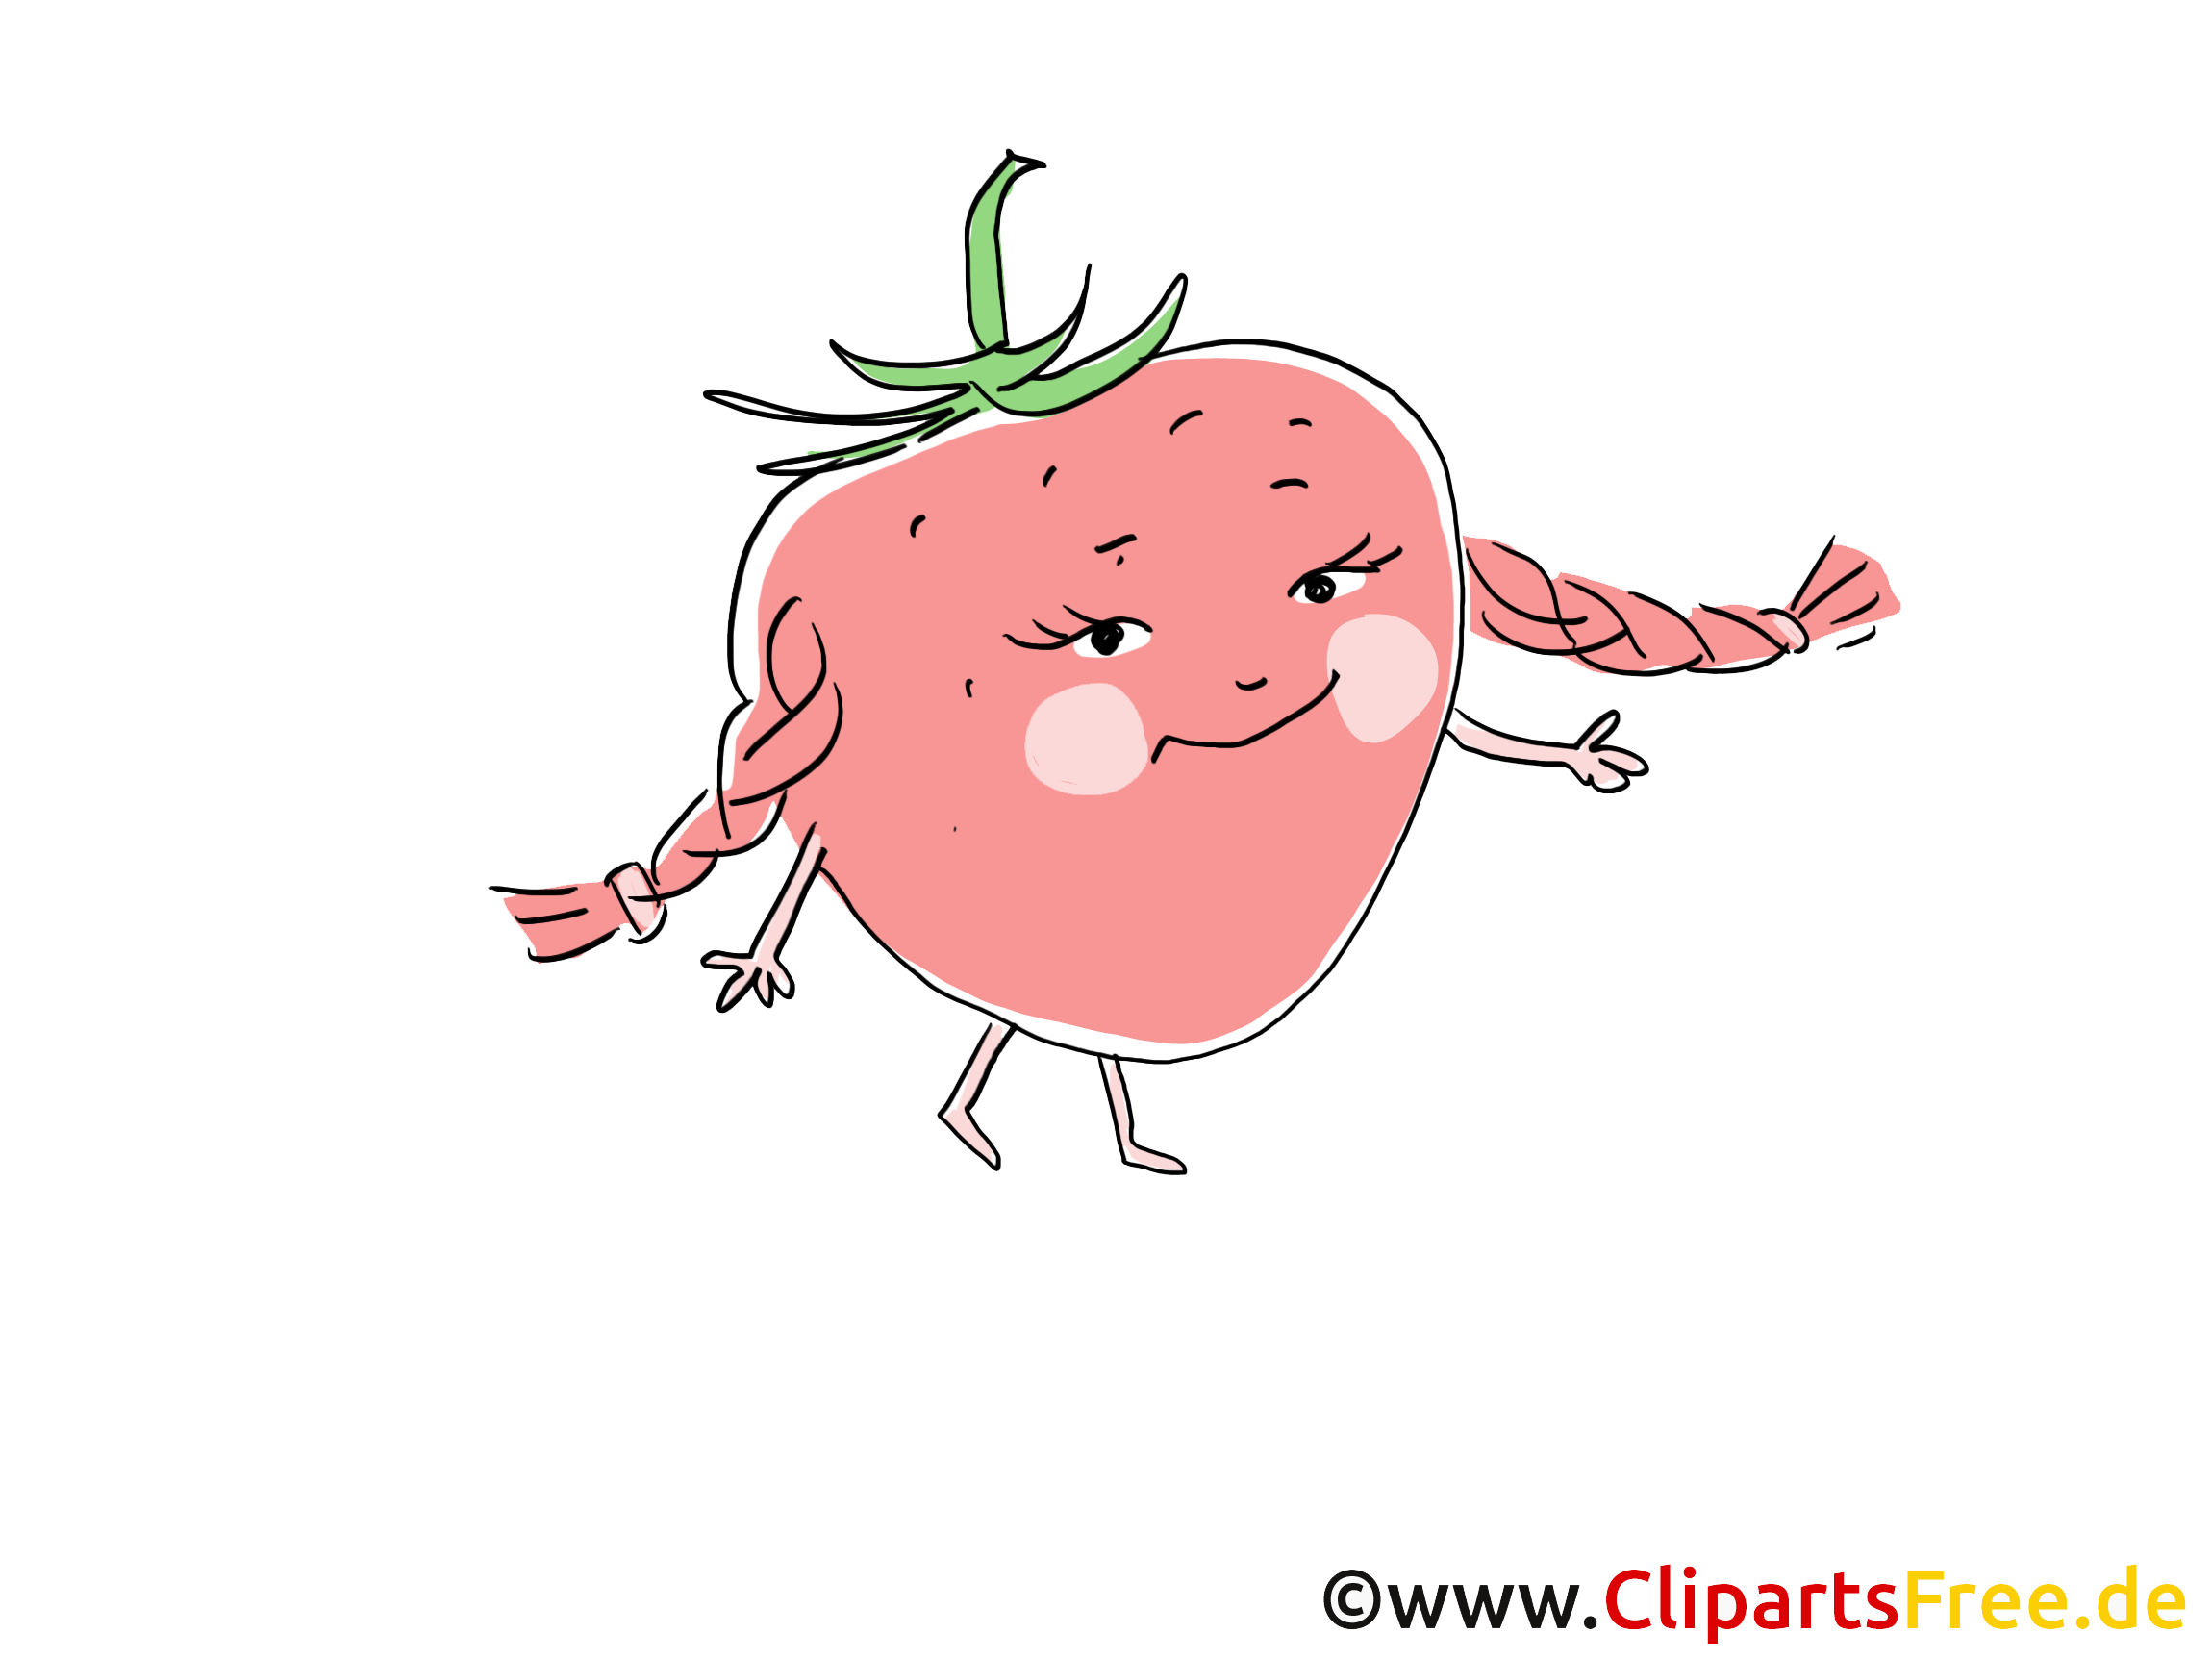 clipart kostenlos erdbeere - photo #7